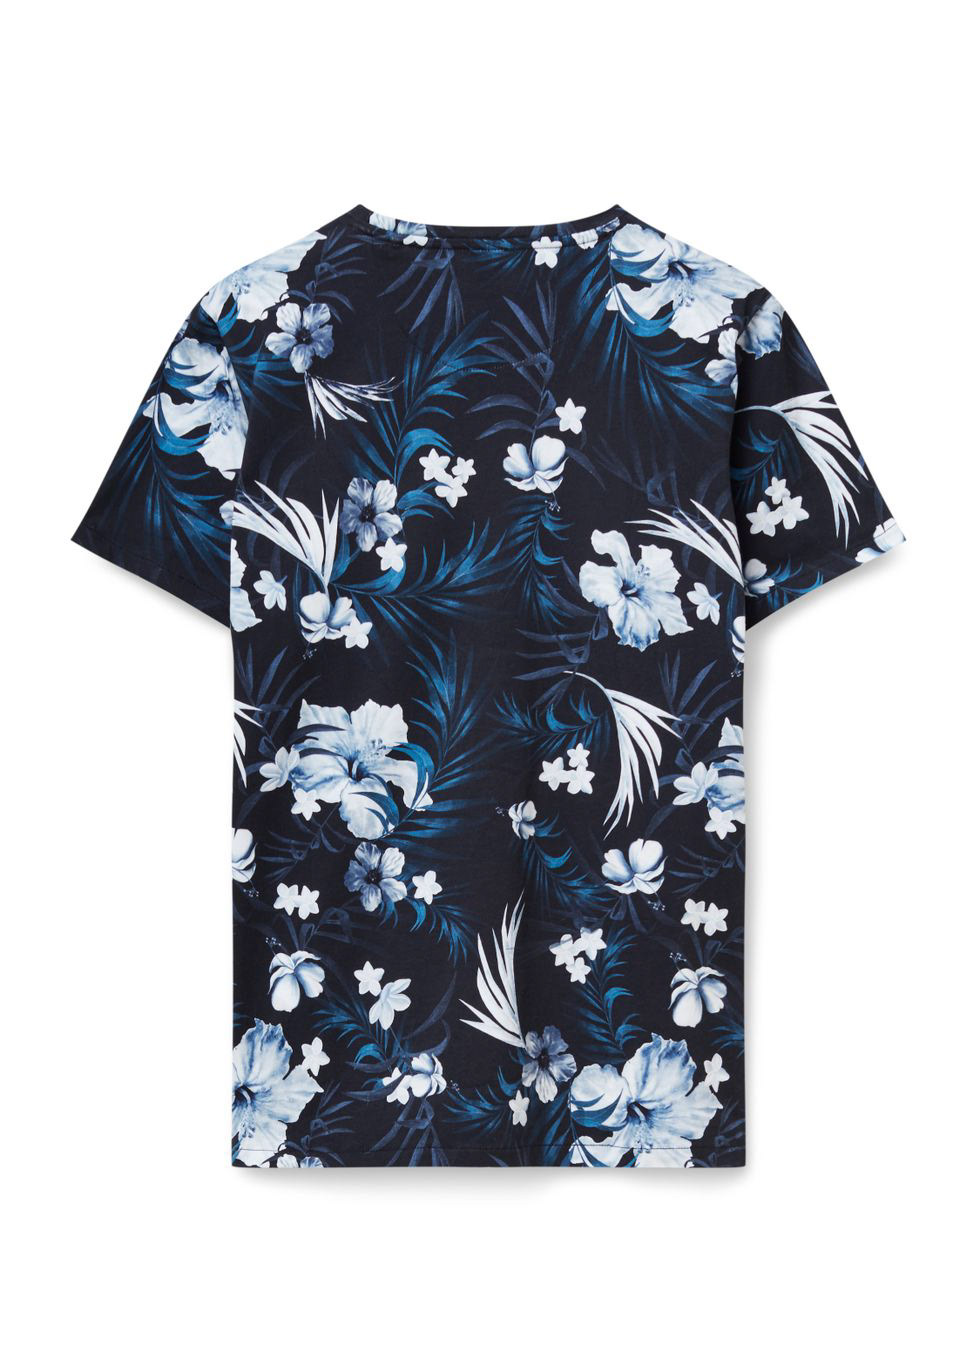 Allover print AOP Fashion  Flowers leafs pattern print textile tshirt